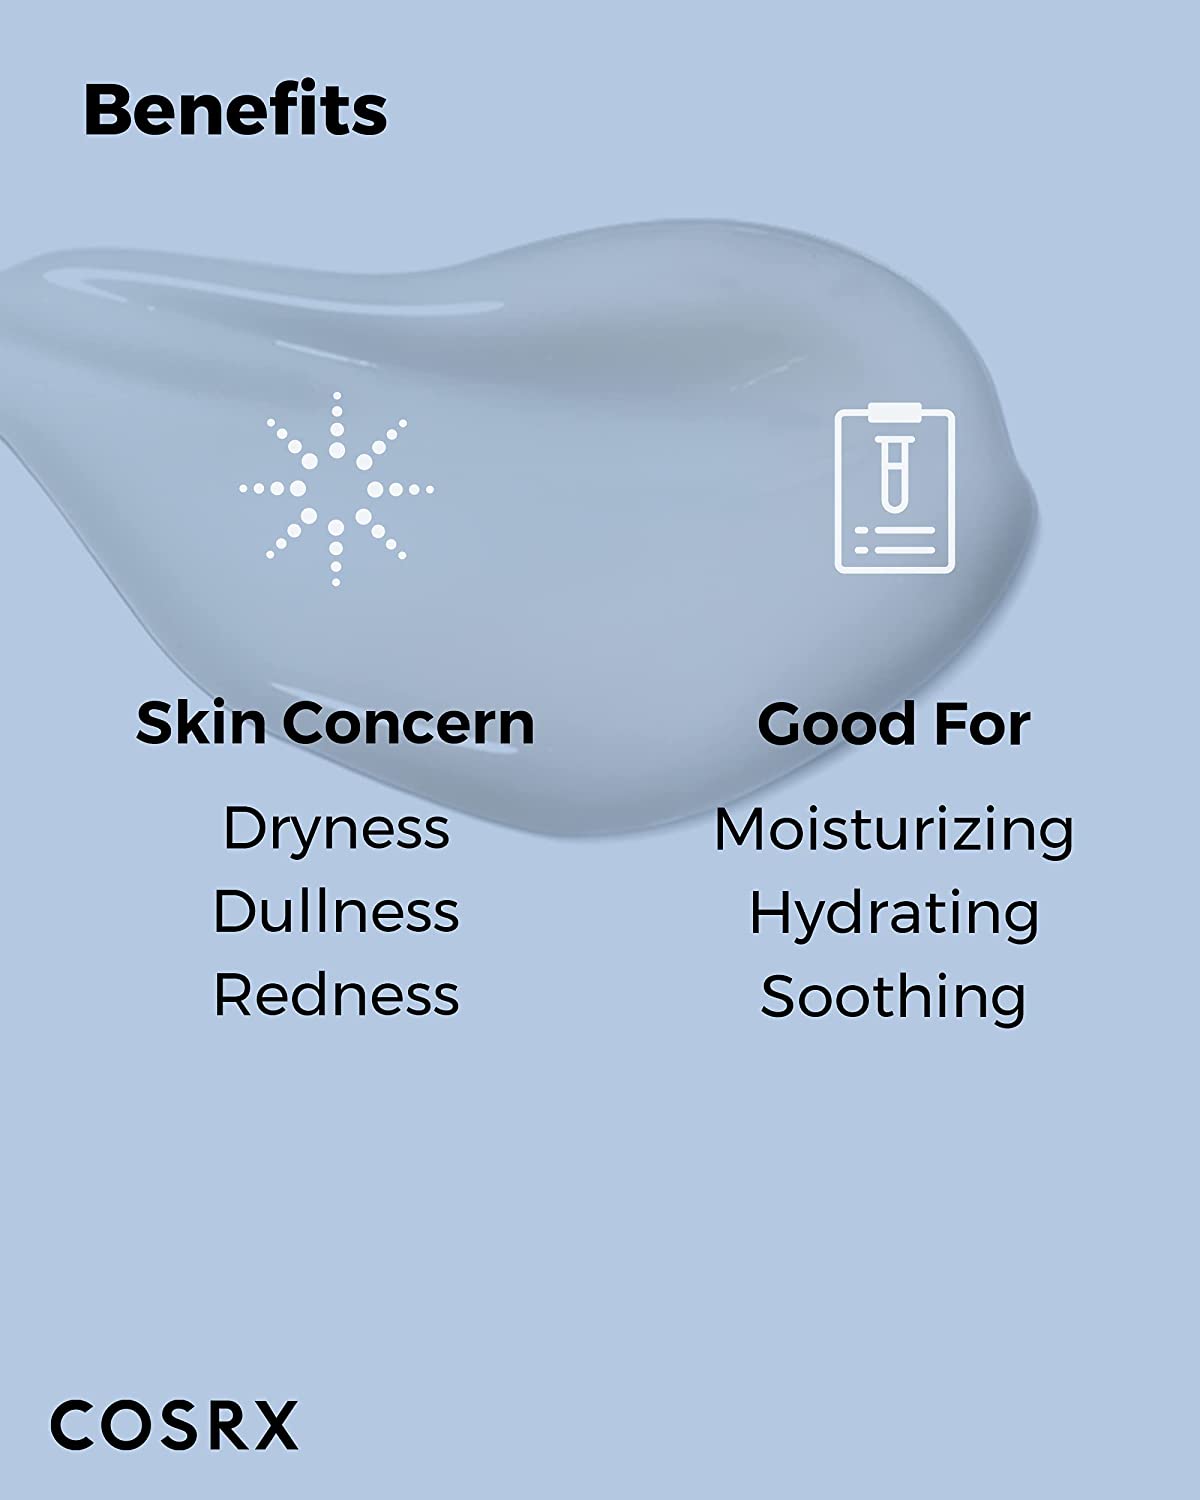 COSRX Oil Free Lotion with Birch Sap, Daily Acne Facial Moisturizer, 3.38 fl.oz